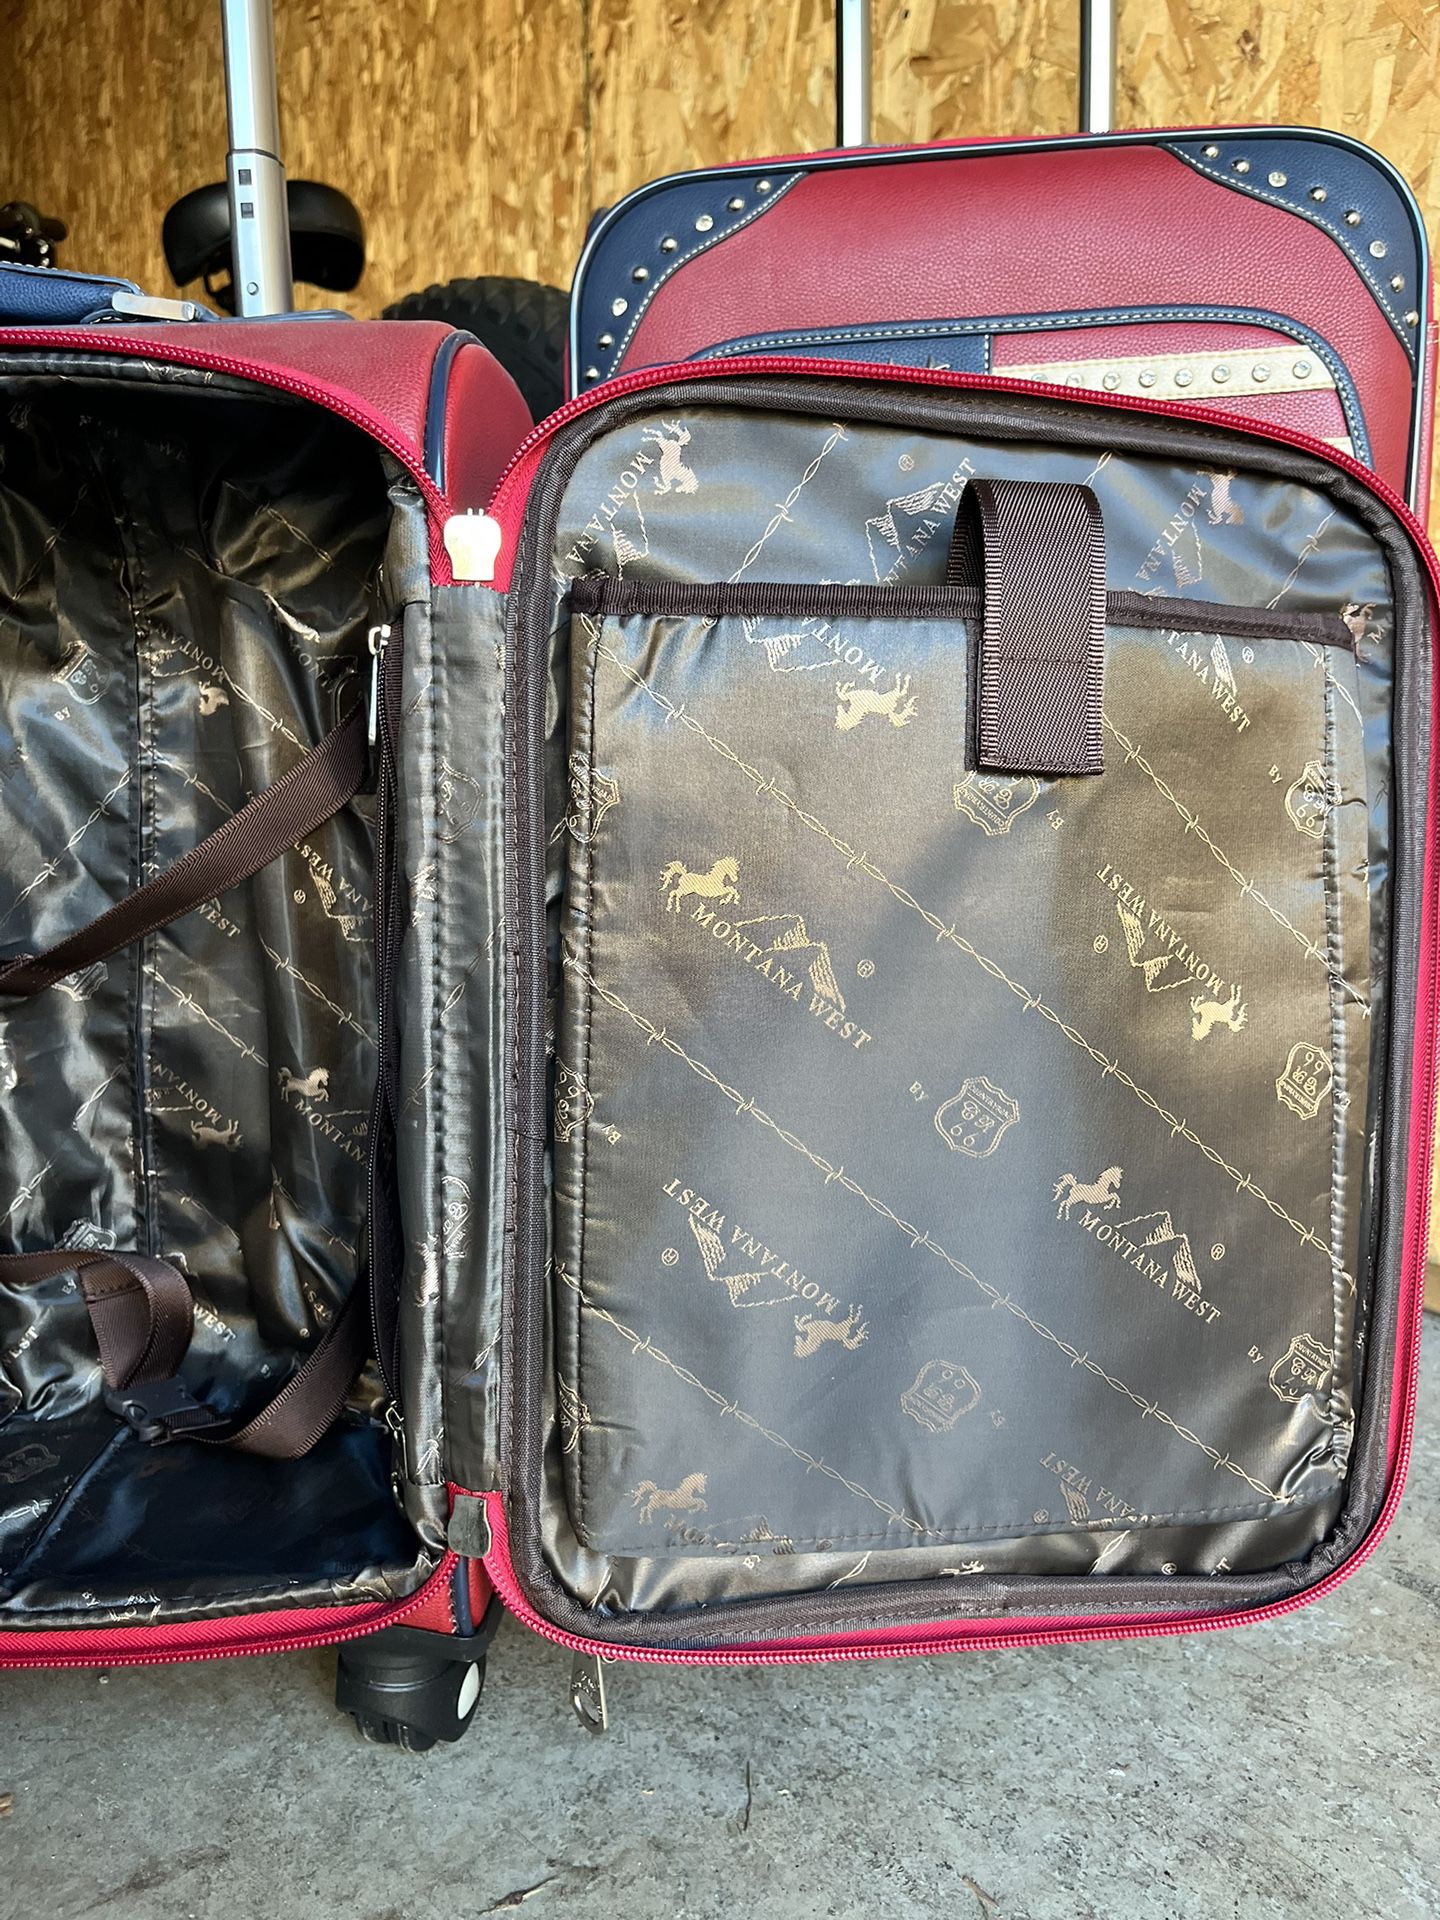 Montana West Luggage set